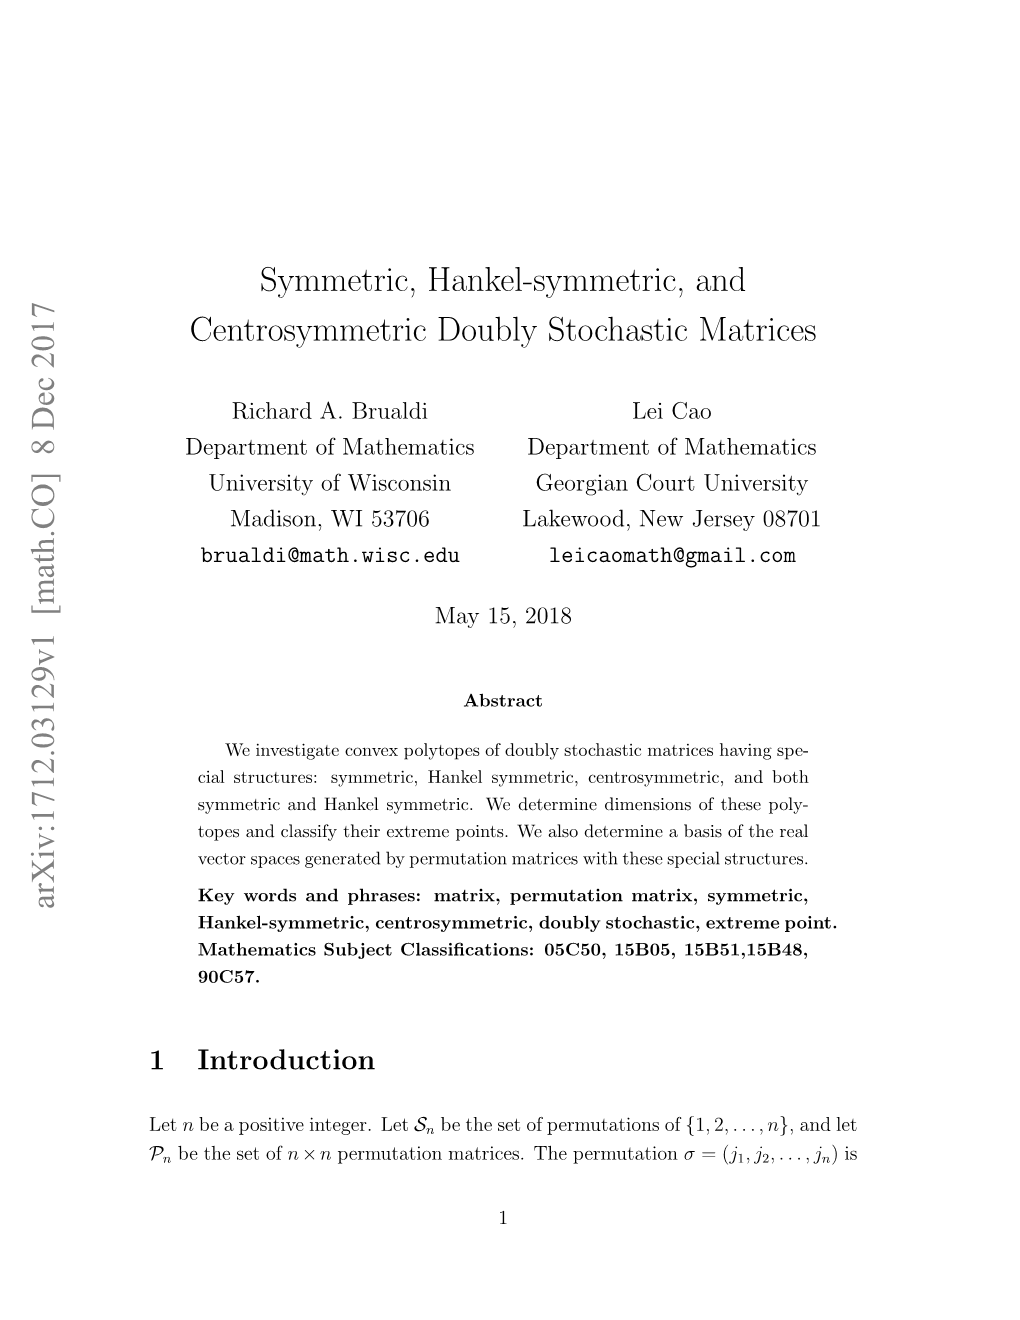 Symmetric, Hankel-Symmetric, and Centrosymmetric Doubly Stochastic